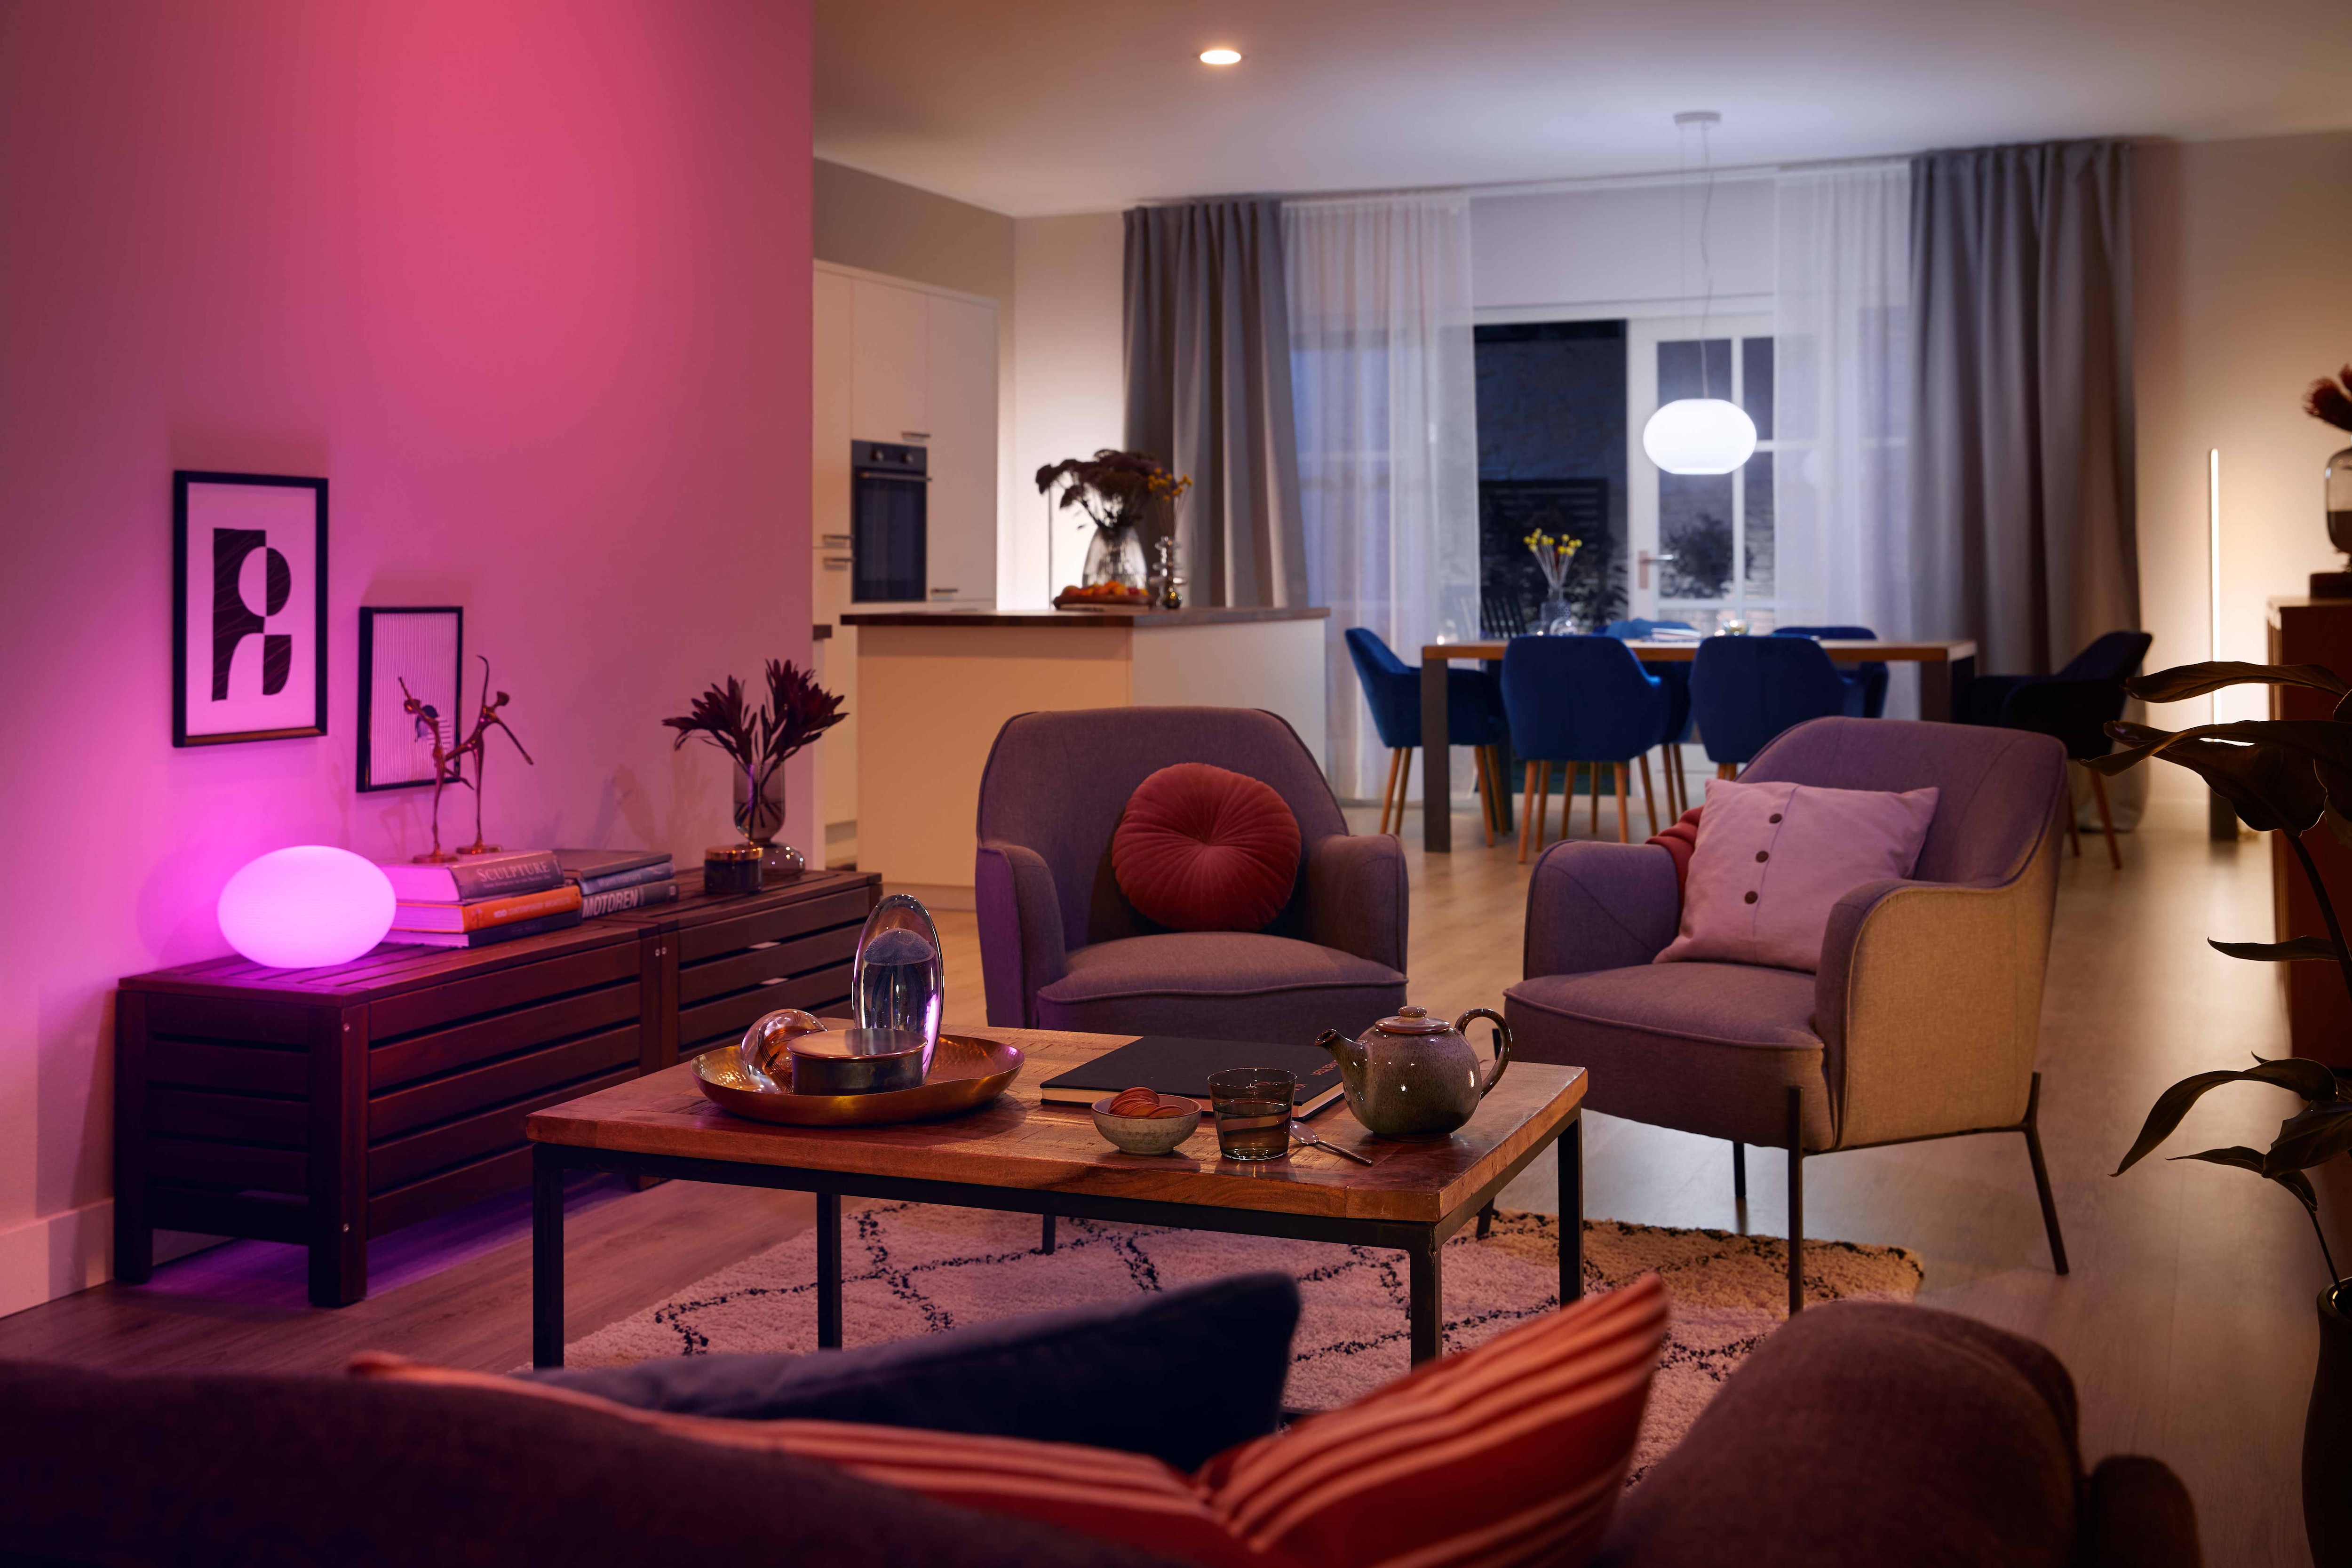 hue lights living room